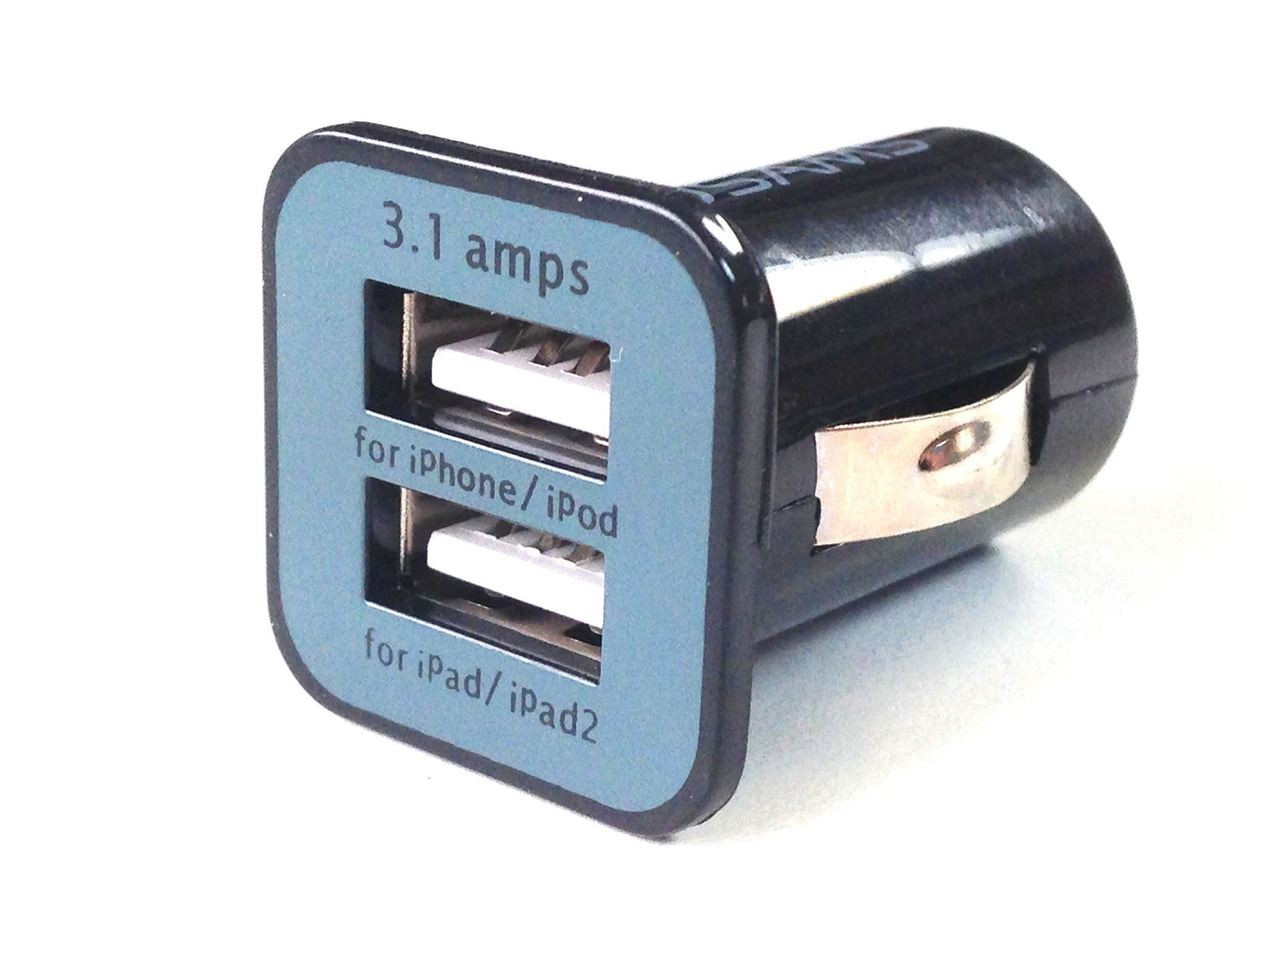 Dual USB Cigarette Lighter Adapter - CRAZEDpilot.com